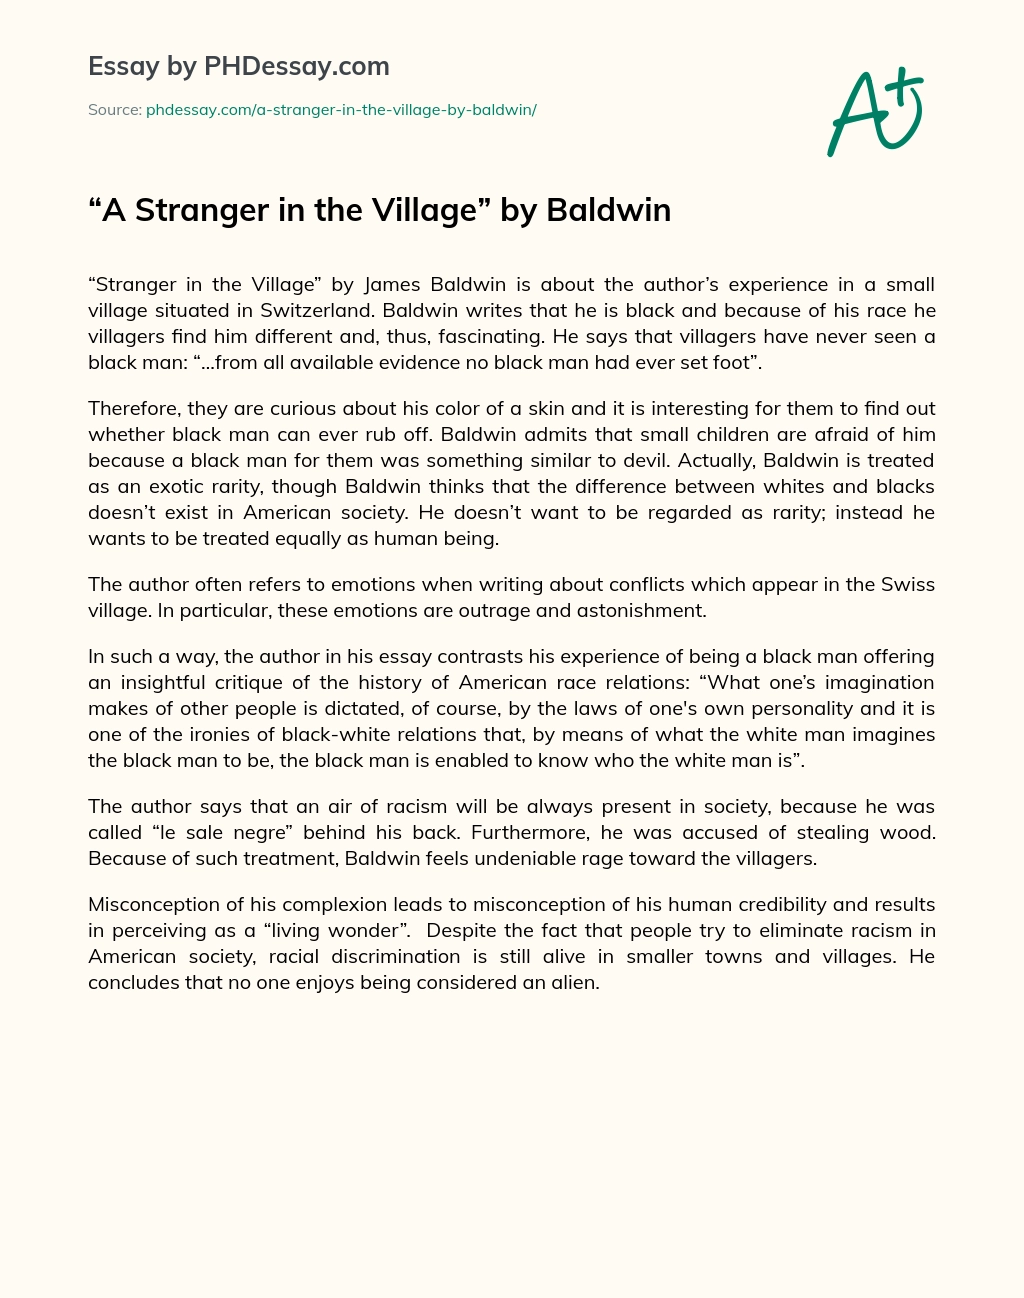 james baldwin essay stranger in the village summary